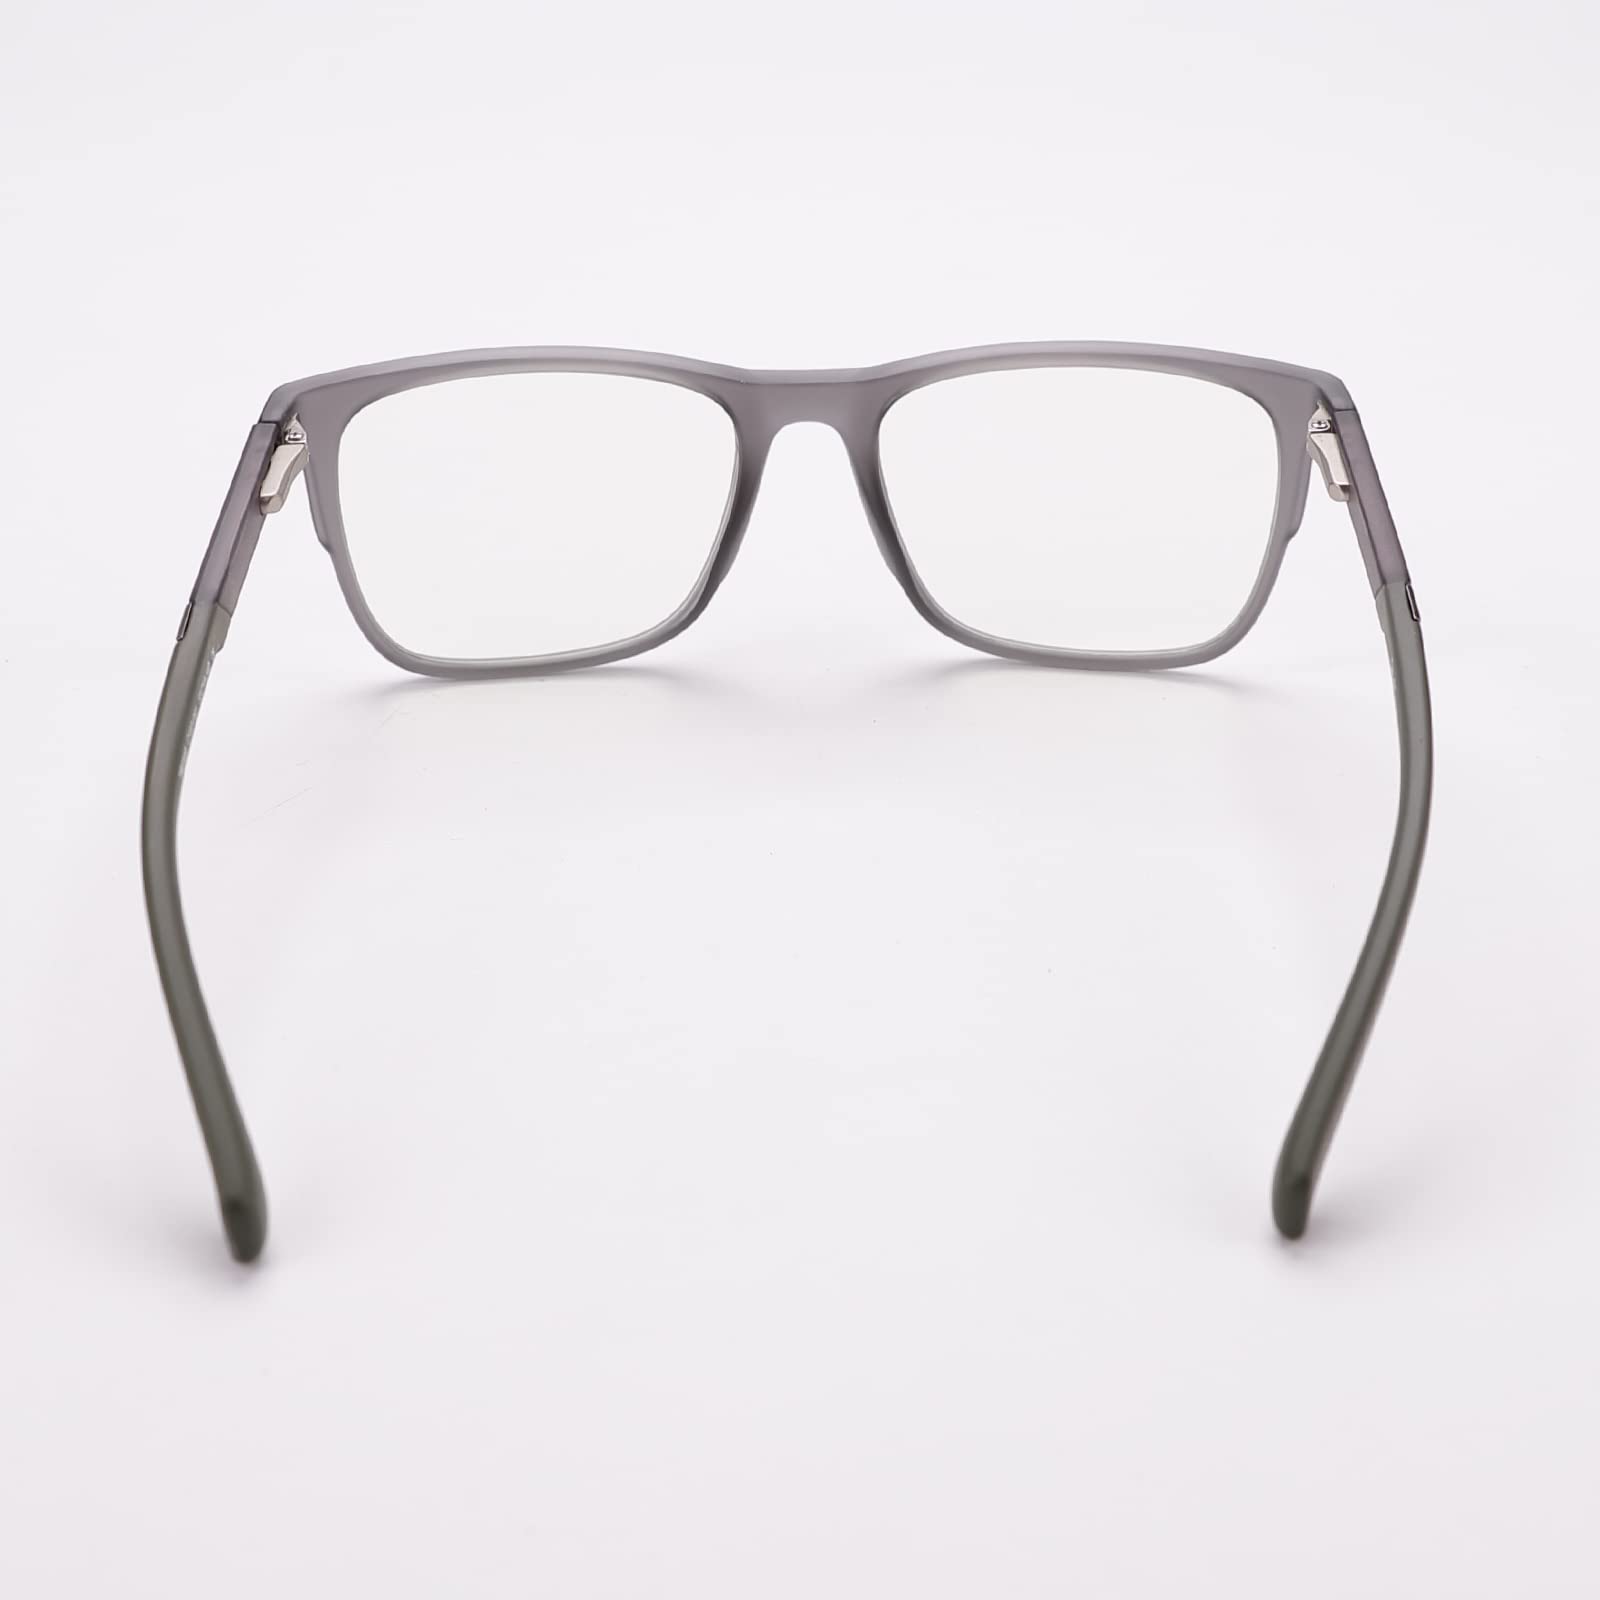 Intellilens Square Blue Cut Computer Glasses for Eye Protection | Zero Power, Anti Glare & Blue Light Filter Glasses | UV Protection Eye Glass for Men & Women (Matte Black) (53-18-140)